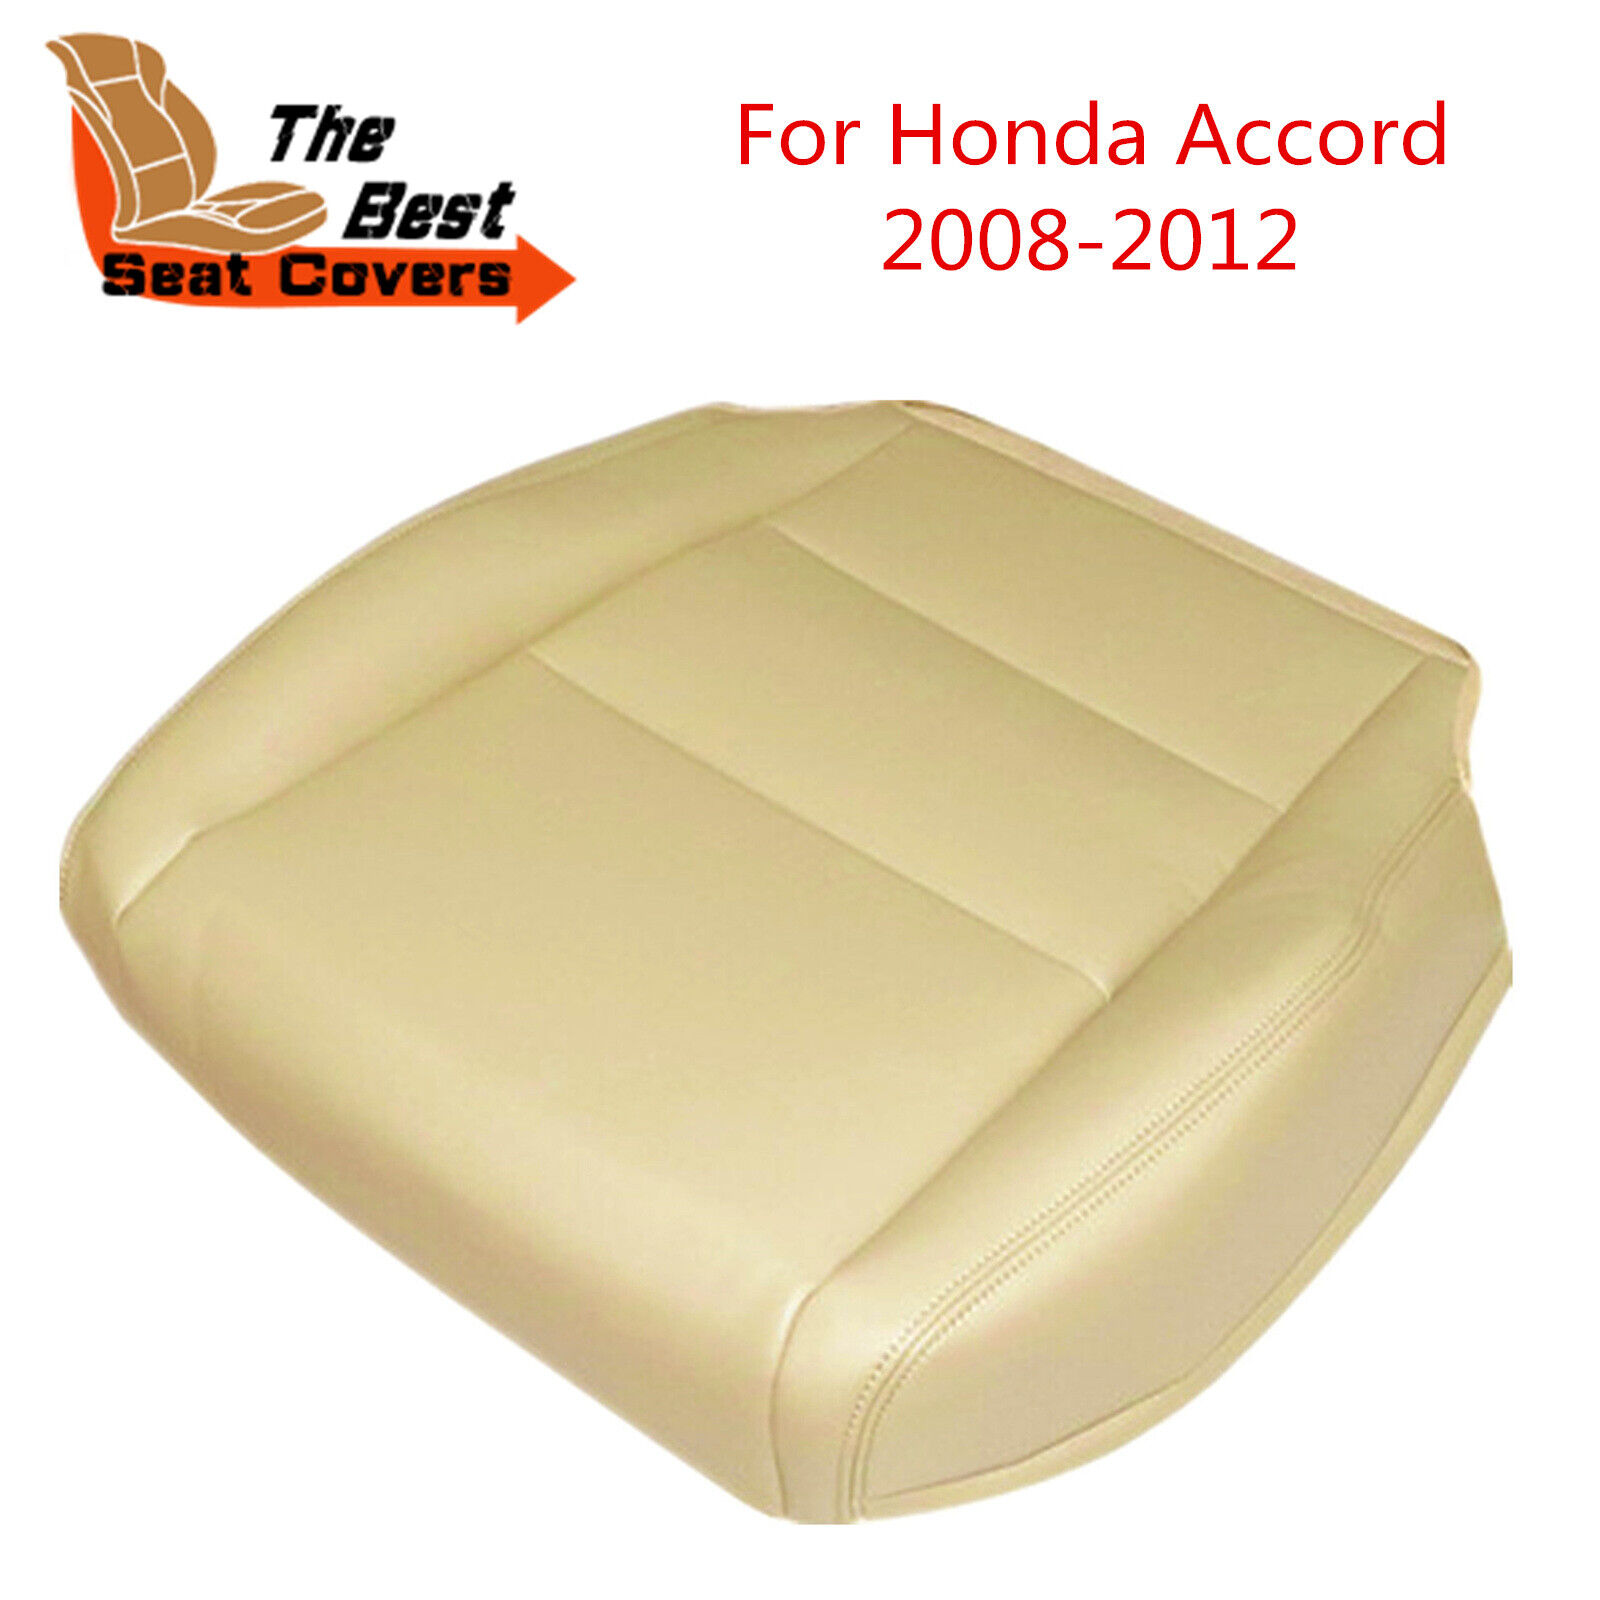 Fits 2008-2012 Honda Accord Passenger Bottom Leather Seat Cover Tan